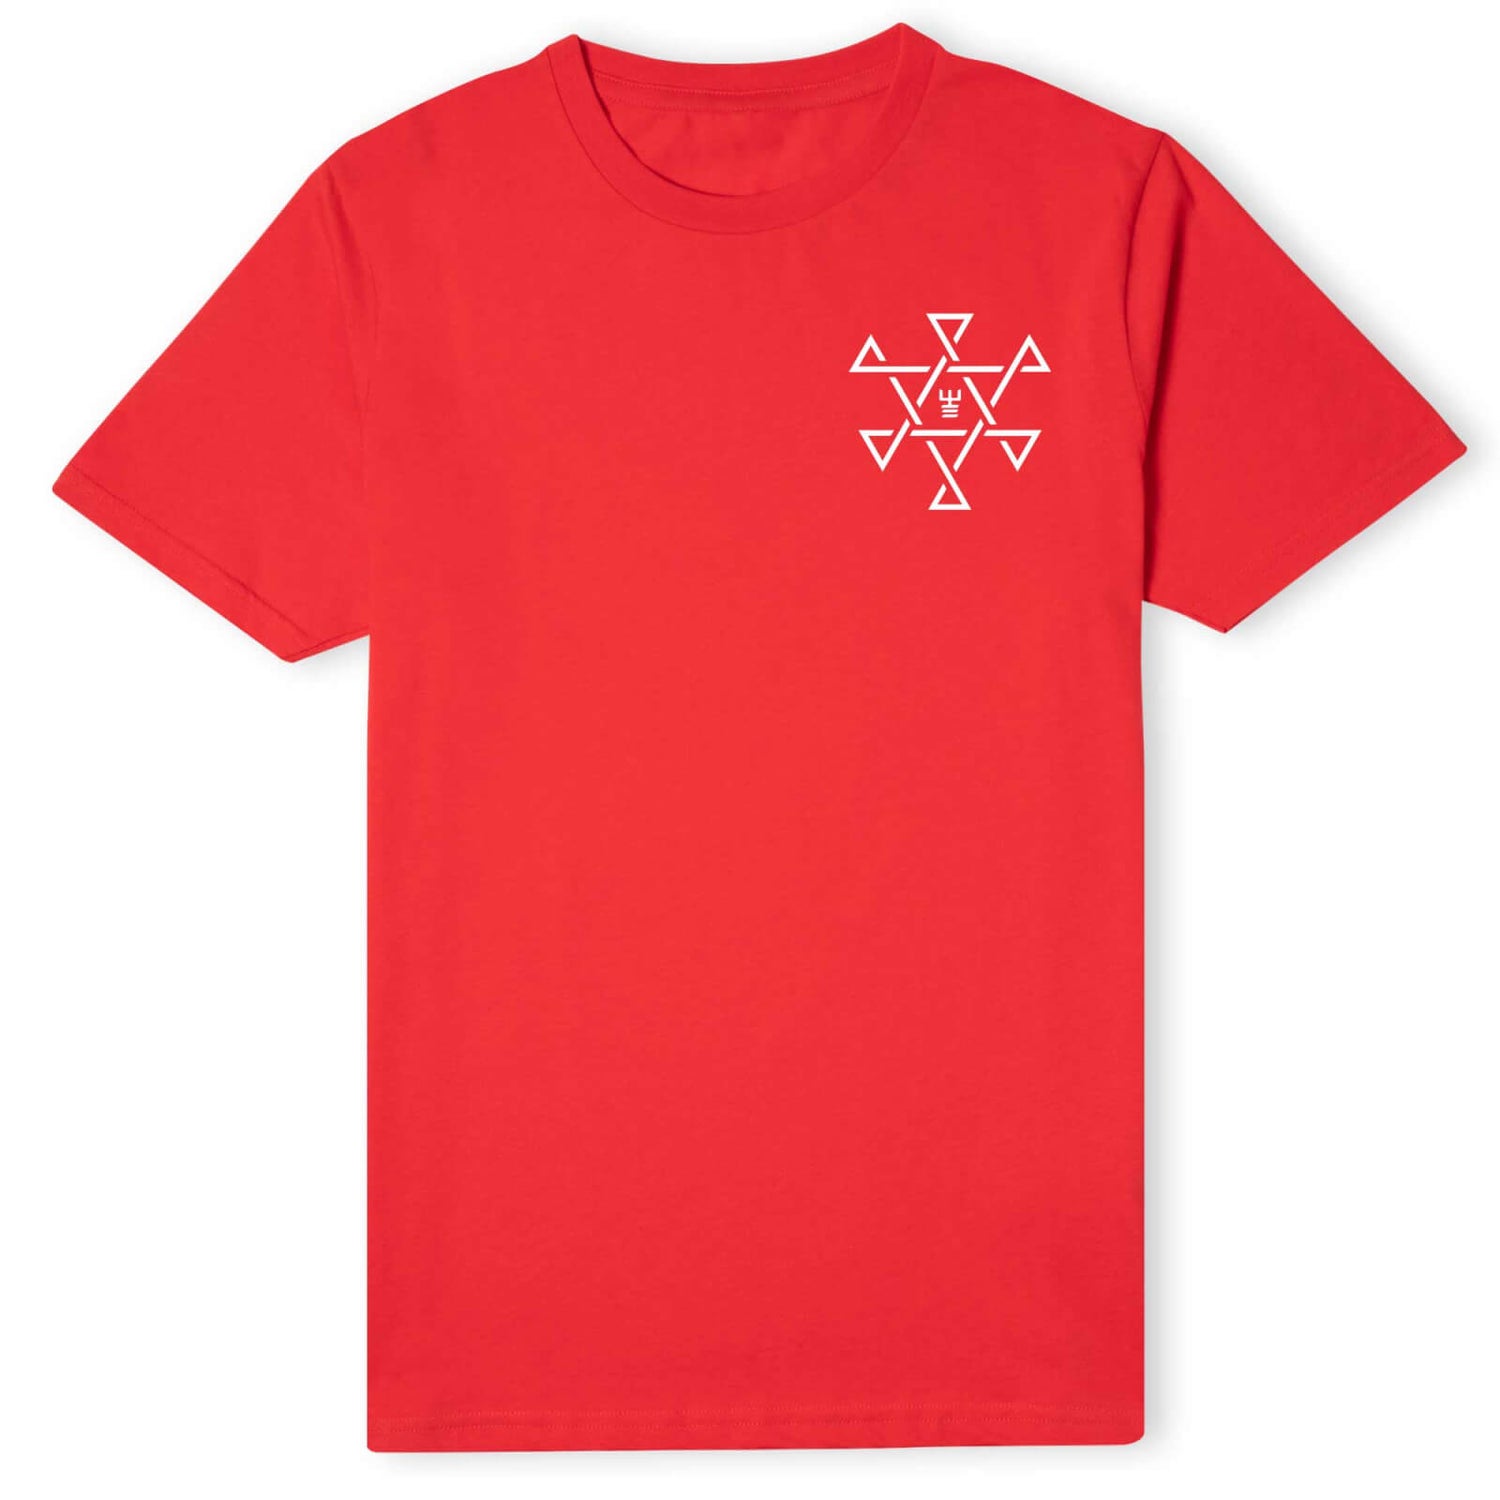 Tribes of Midgard Valhalla Men's T-Shirt - Red